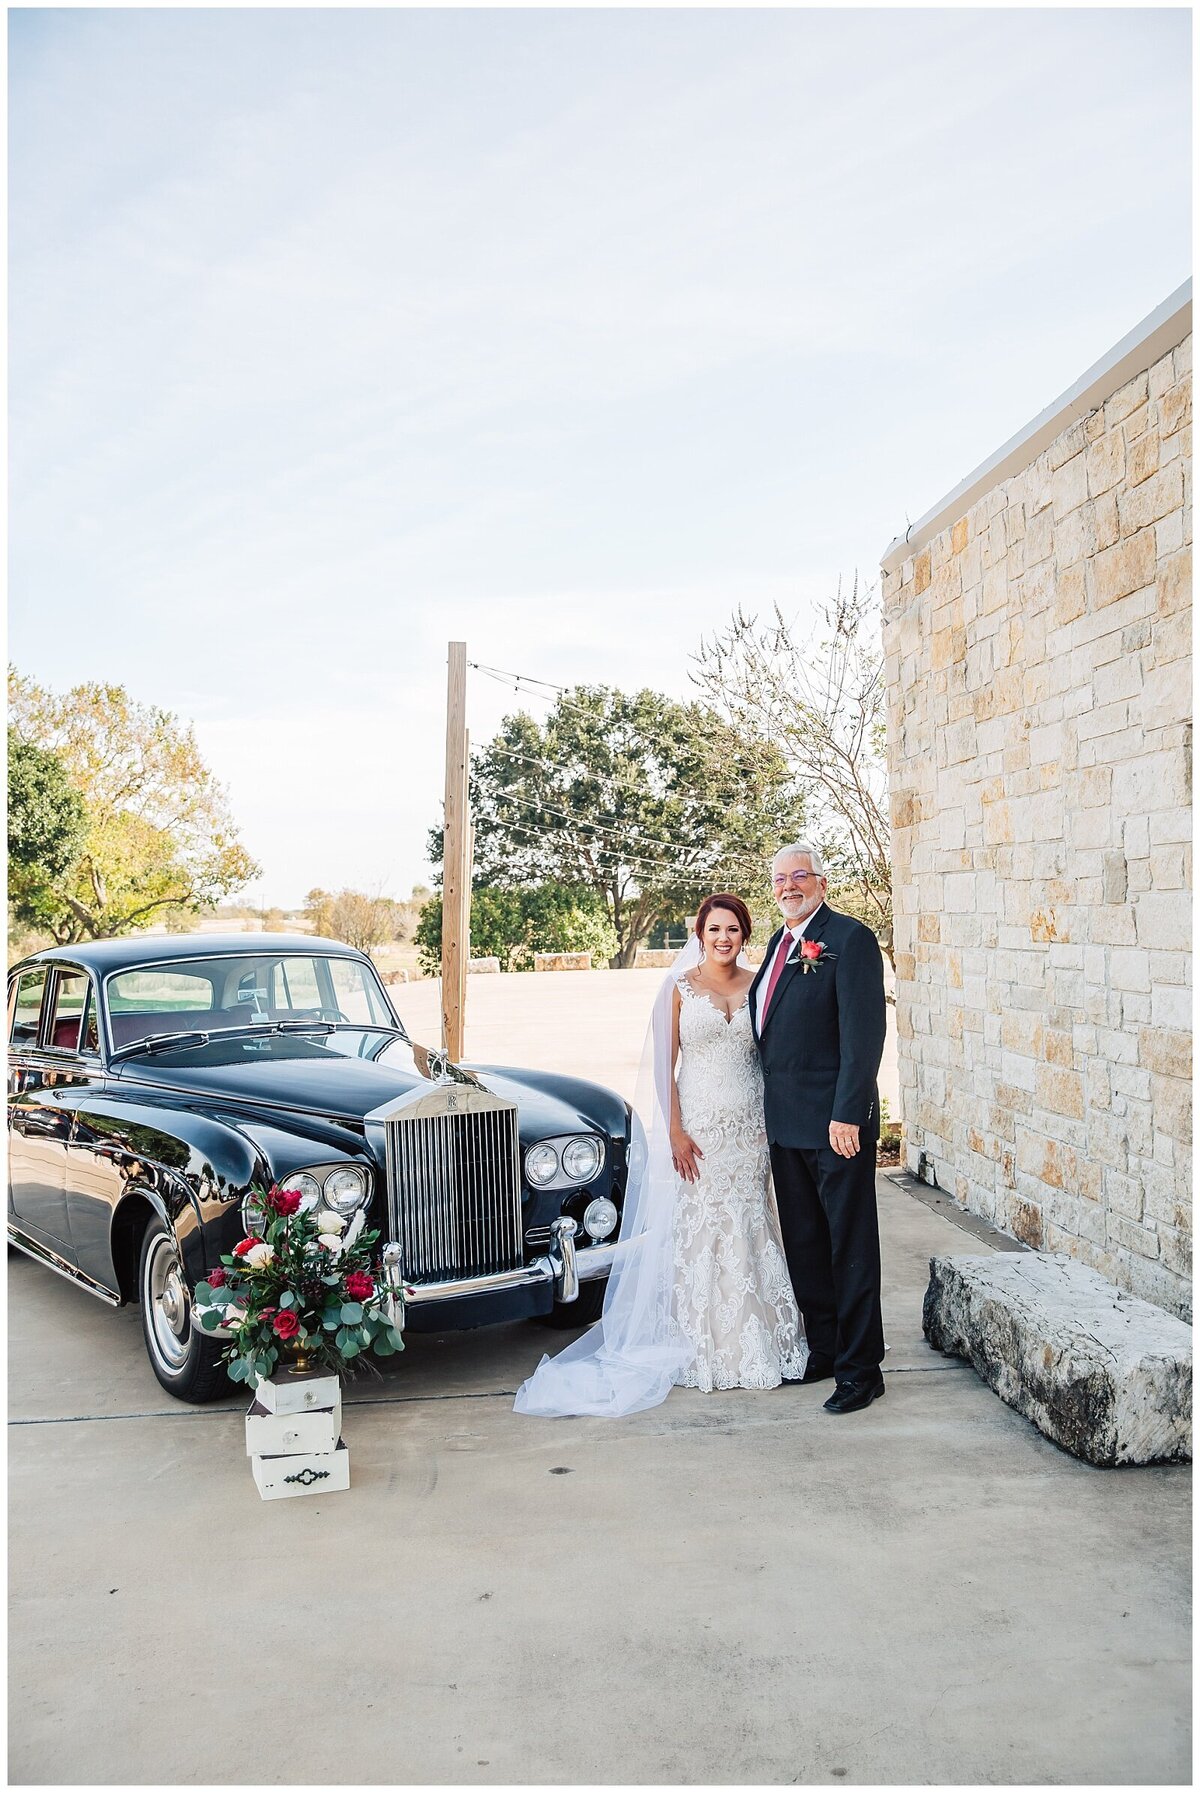 Rustic Burgundy and Blush Indoor Outdoor Wedding at Emery's Buffalo Creek - Houston Wedding Venue_0669